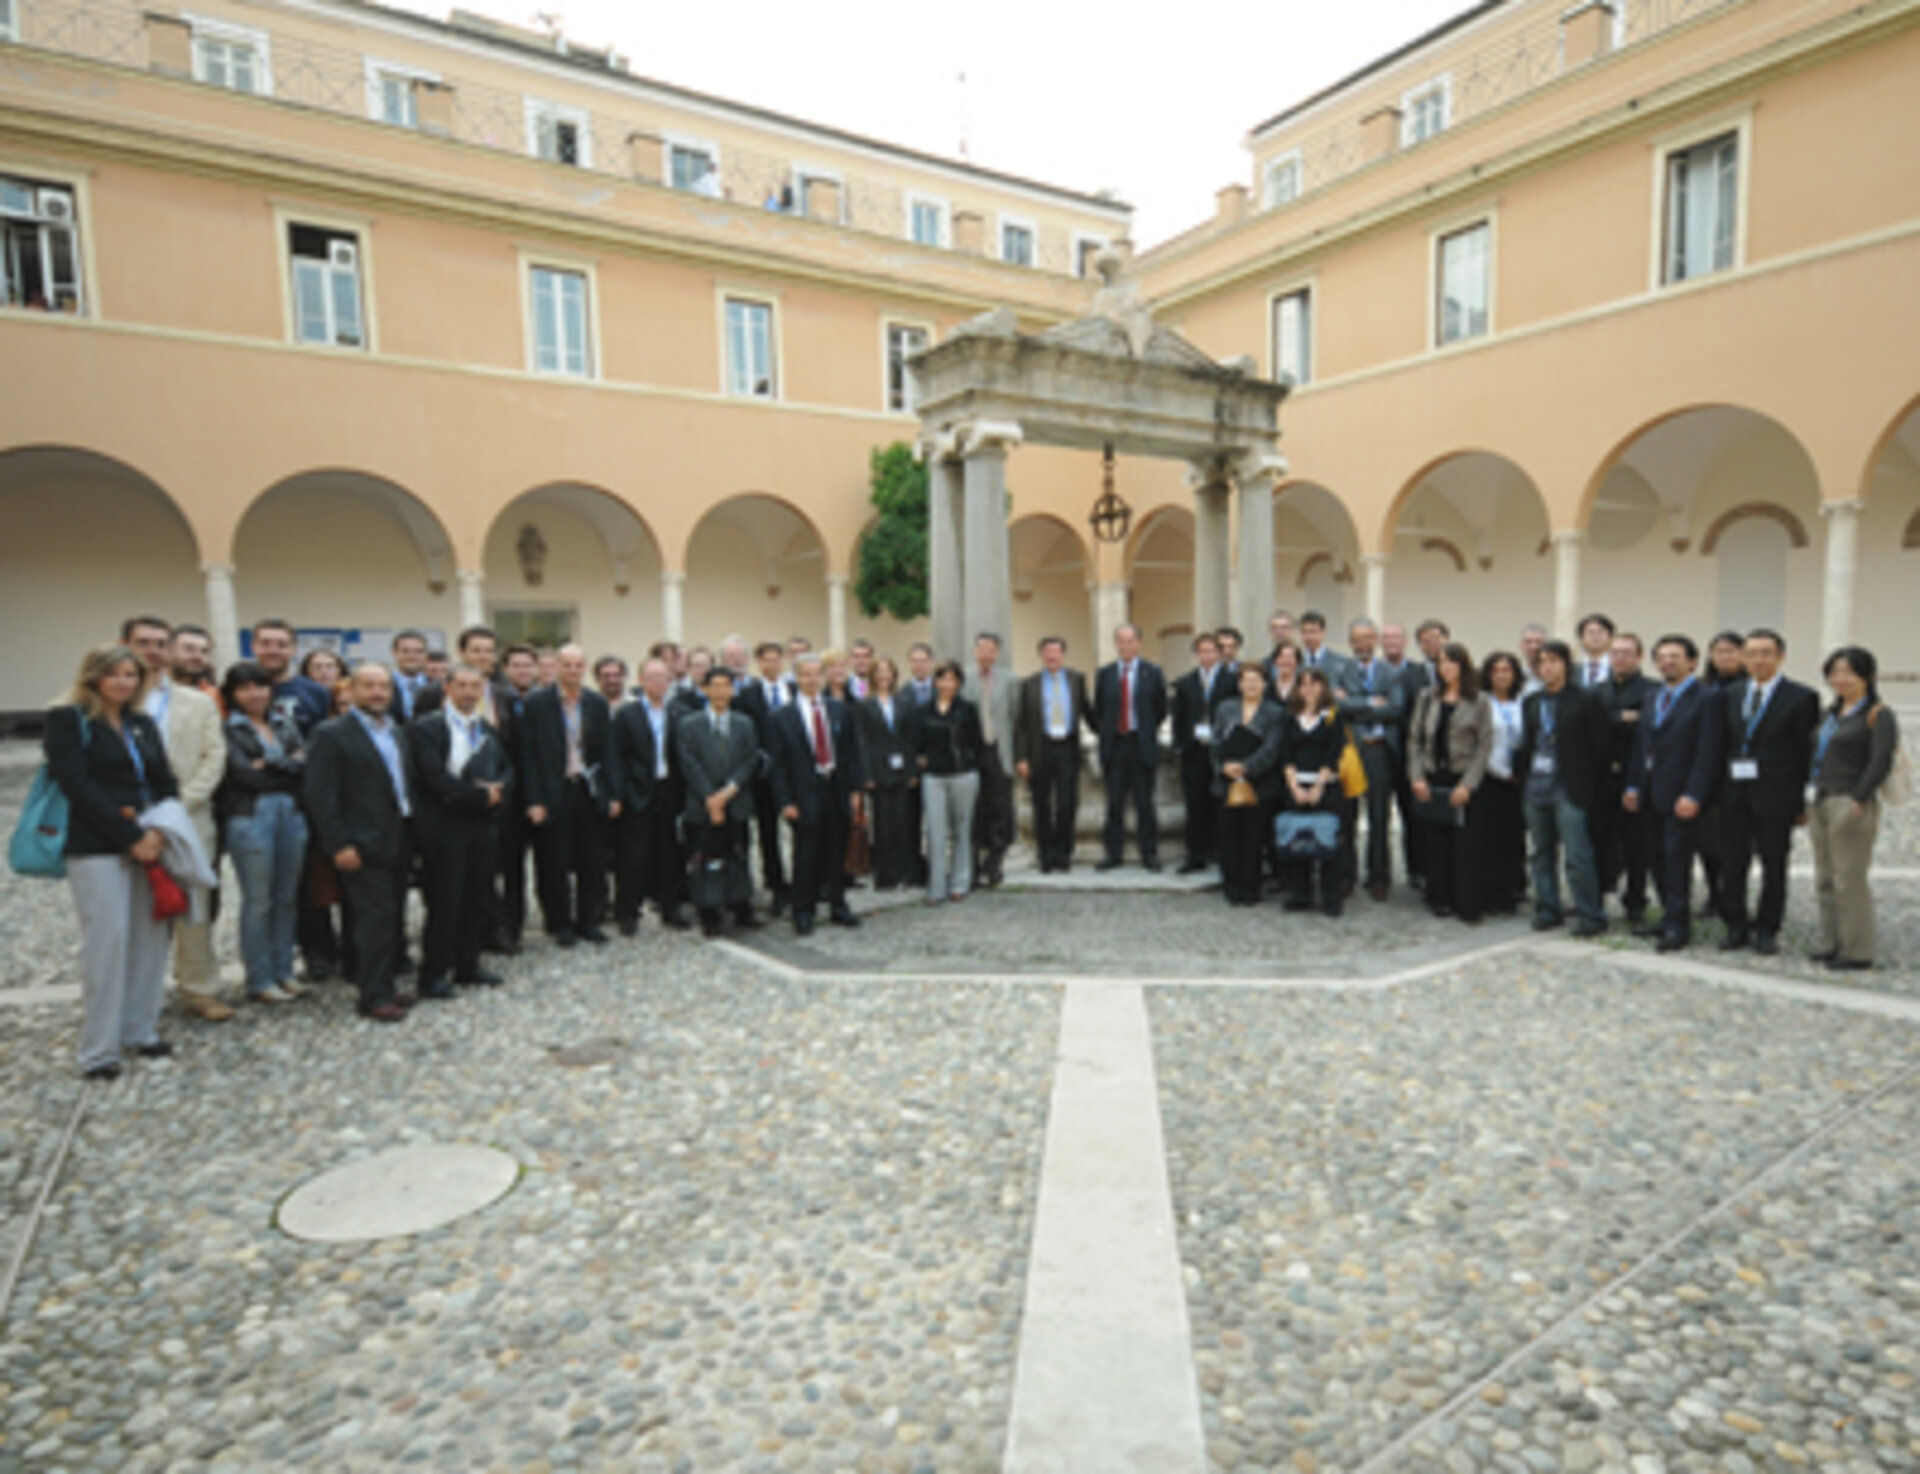 Particpants of SECESA 2008 in the courtyard at La Sapienza University